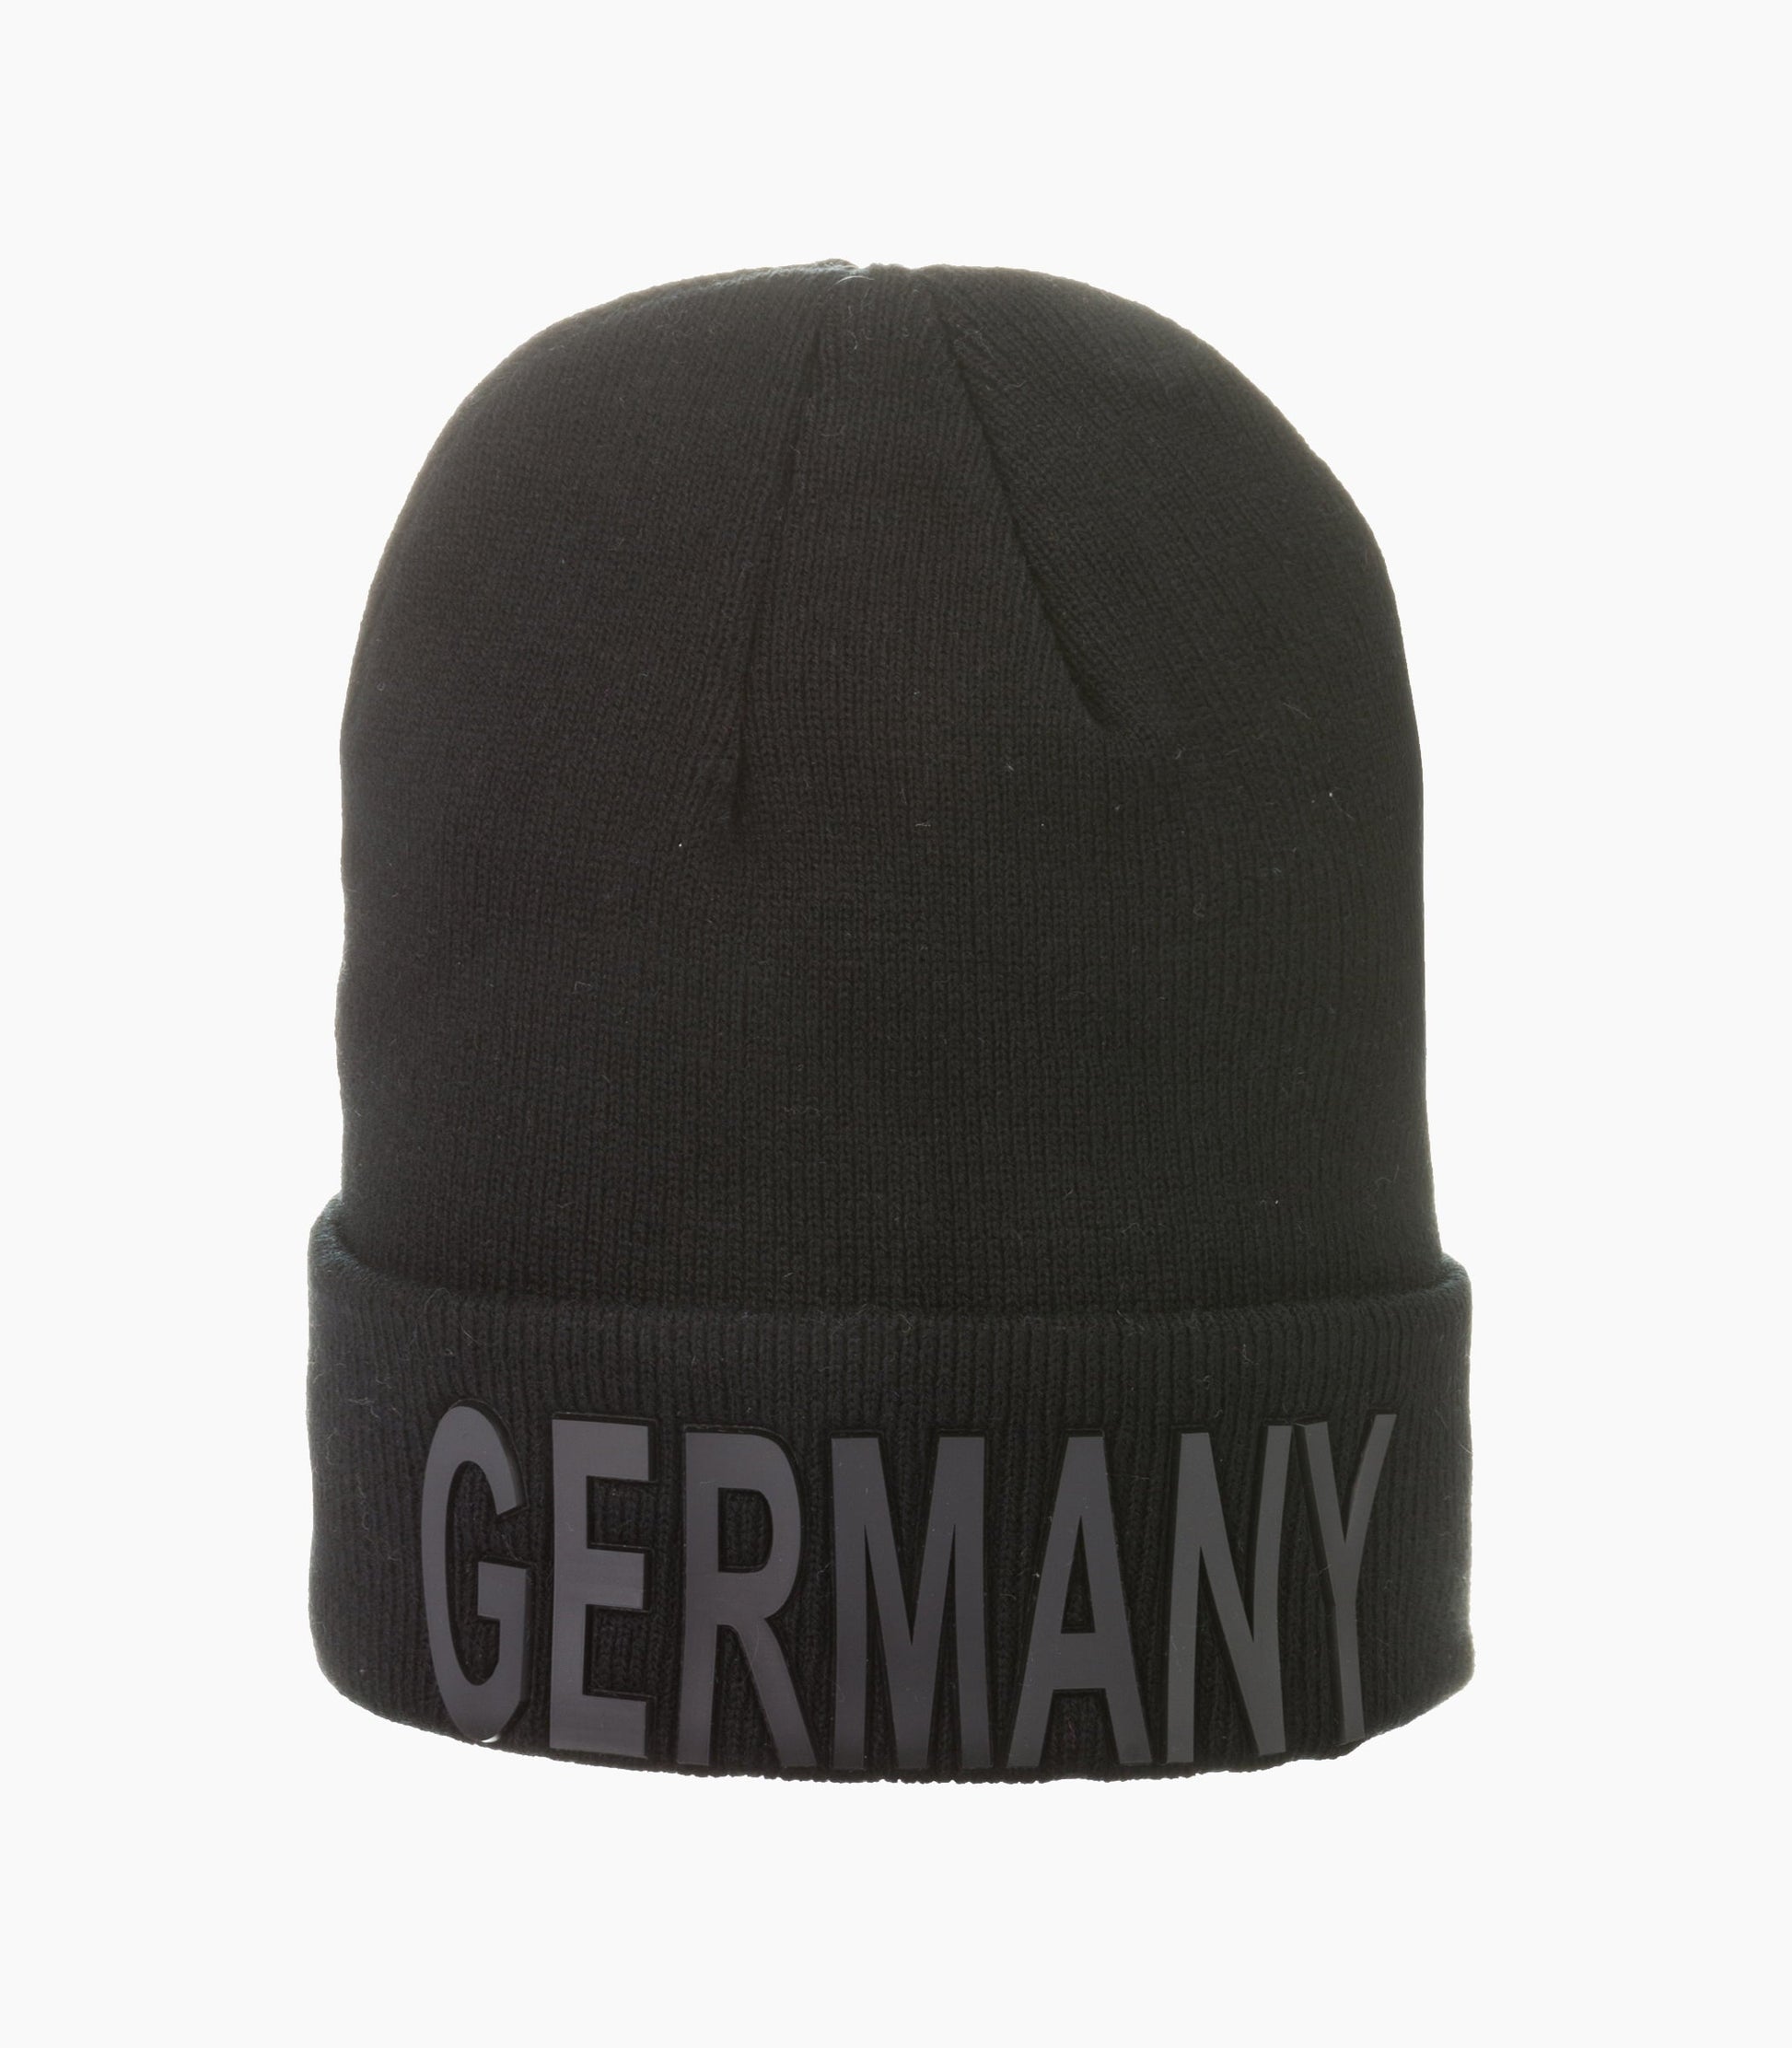 Germany Winter hat - Robin Ruth